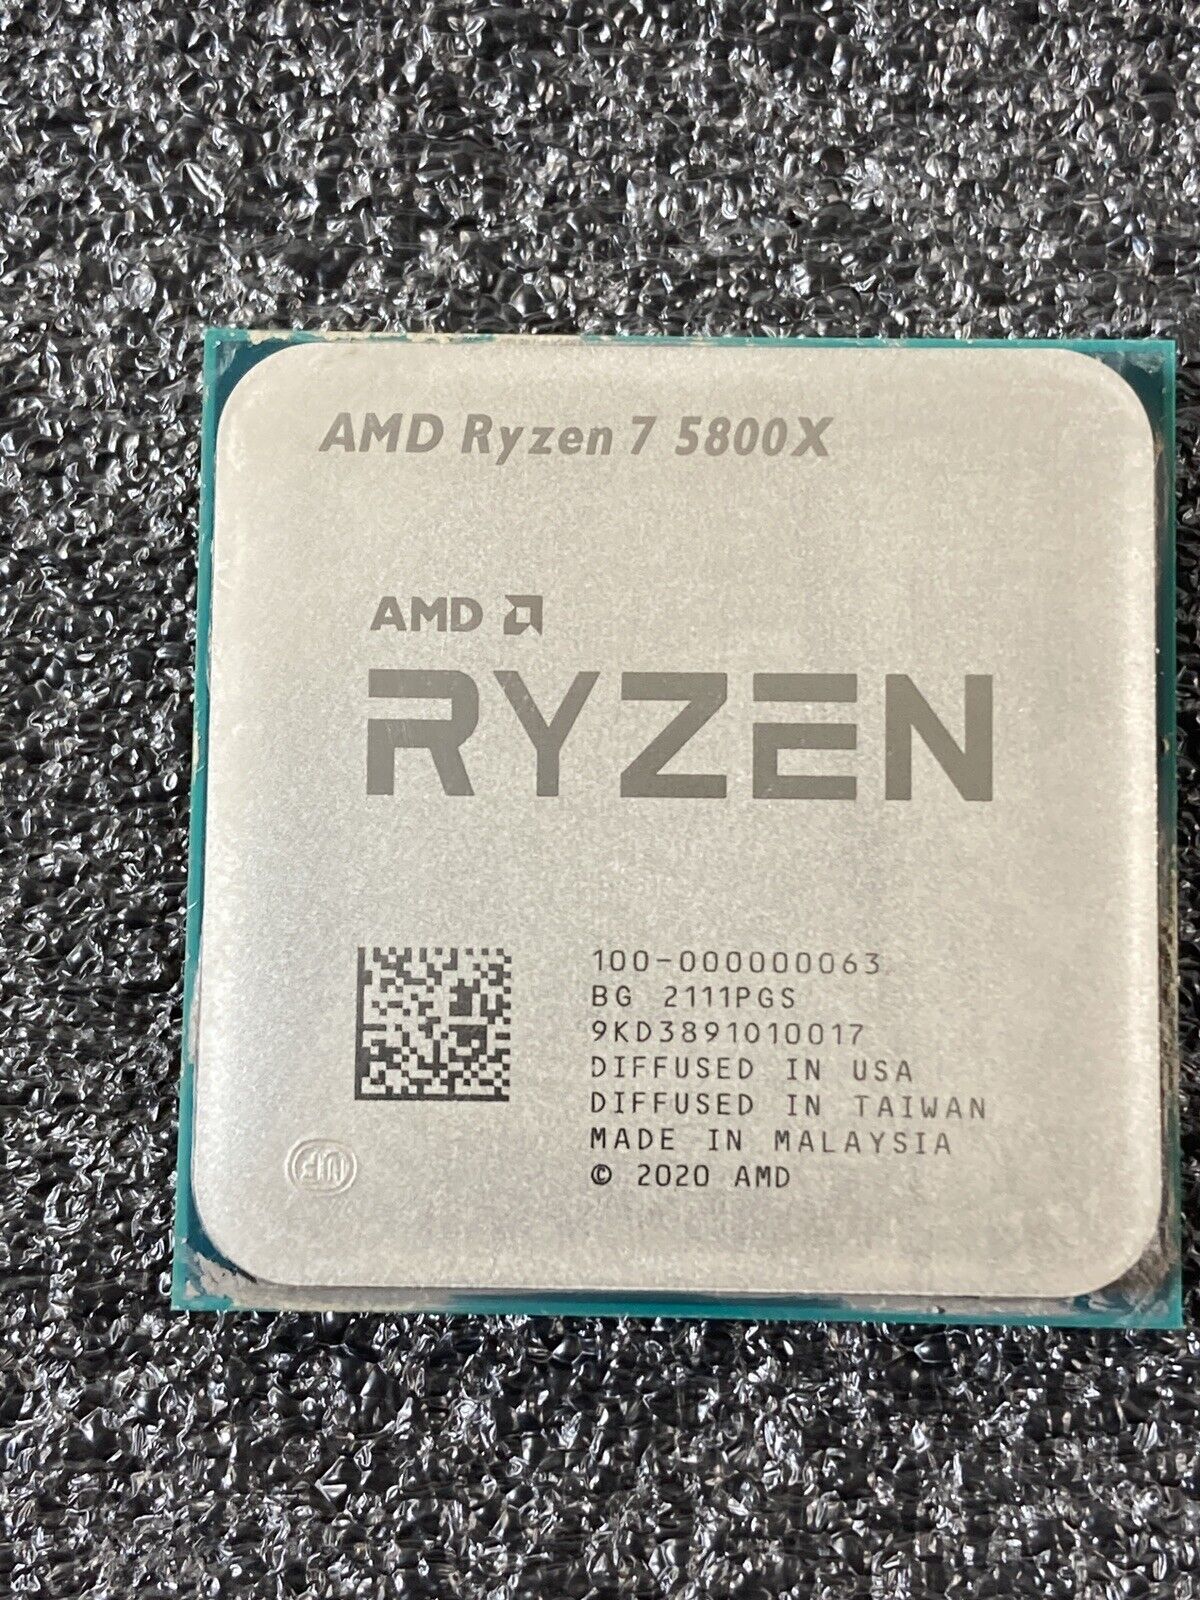 AMD Ryzen 7 5800X Processor (4.7GHz, 8 Cores, Socket AM4) Thermal Around Pins